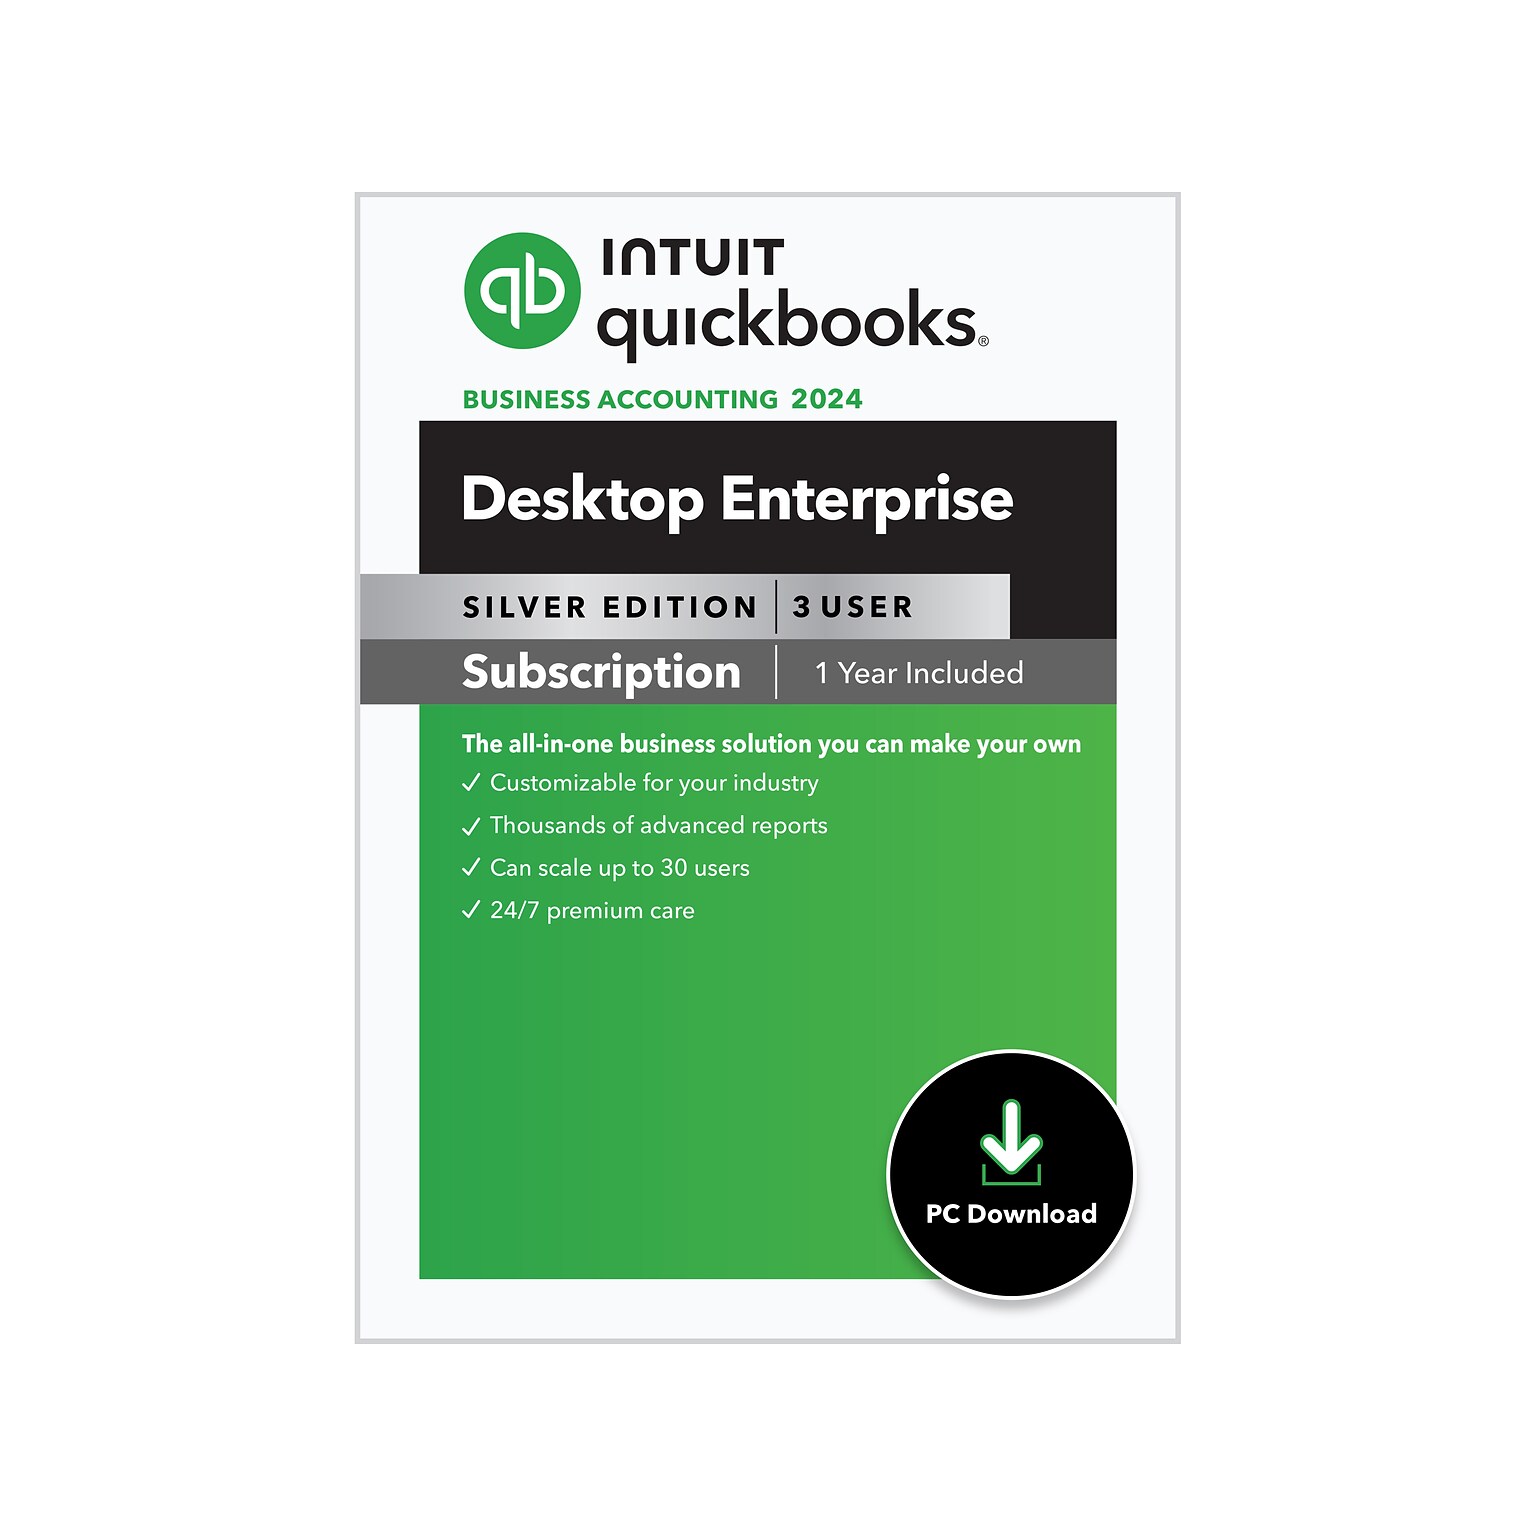 QuickBooks Desktop Enterprise Silver 2024 for 3 Users, 1-Year Subscription, Windows, Download (5102299)